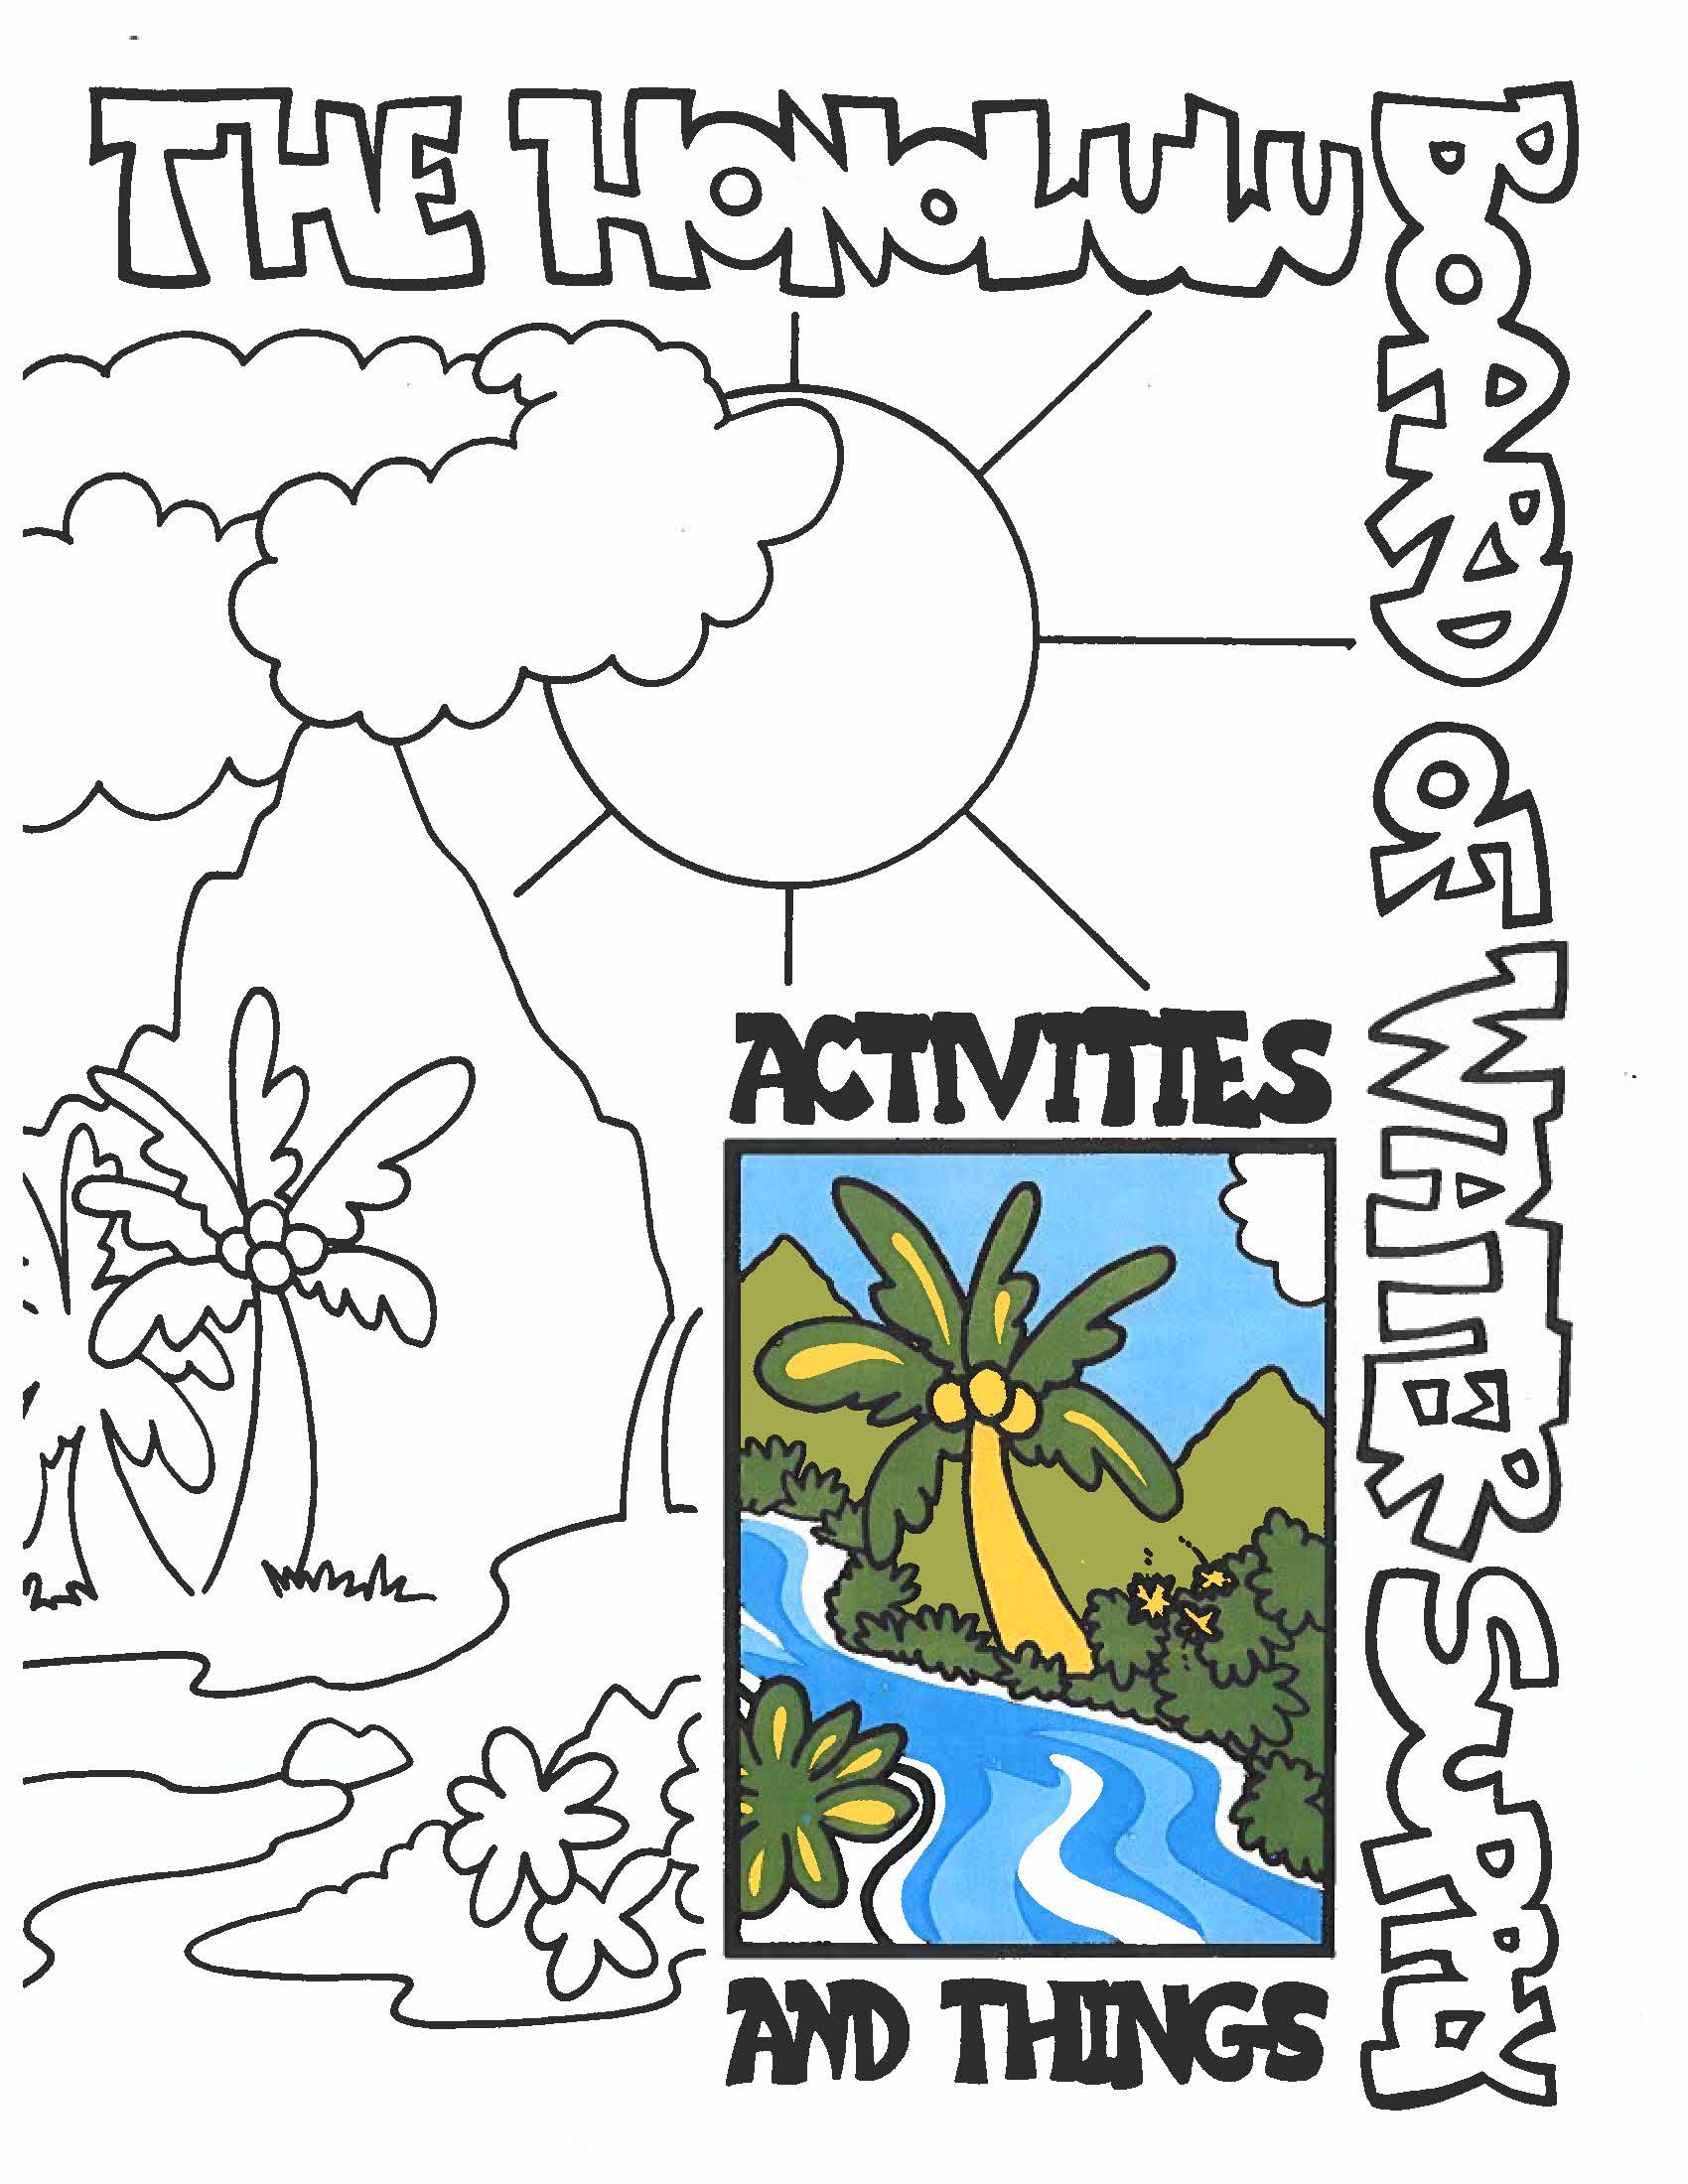 Activity book